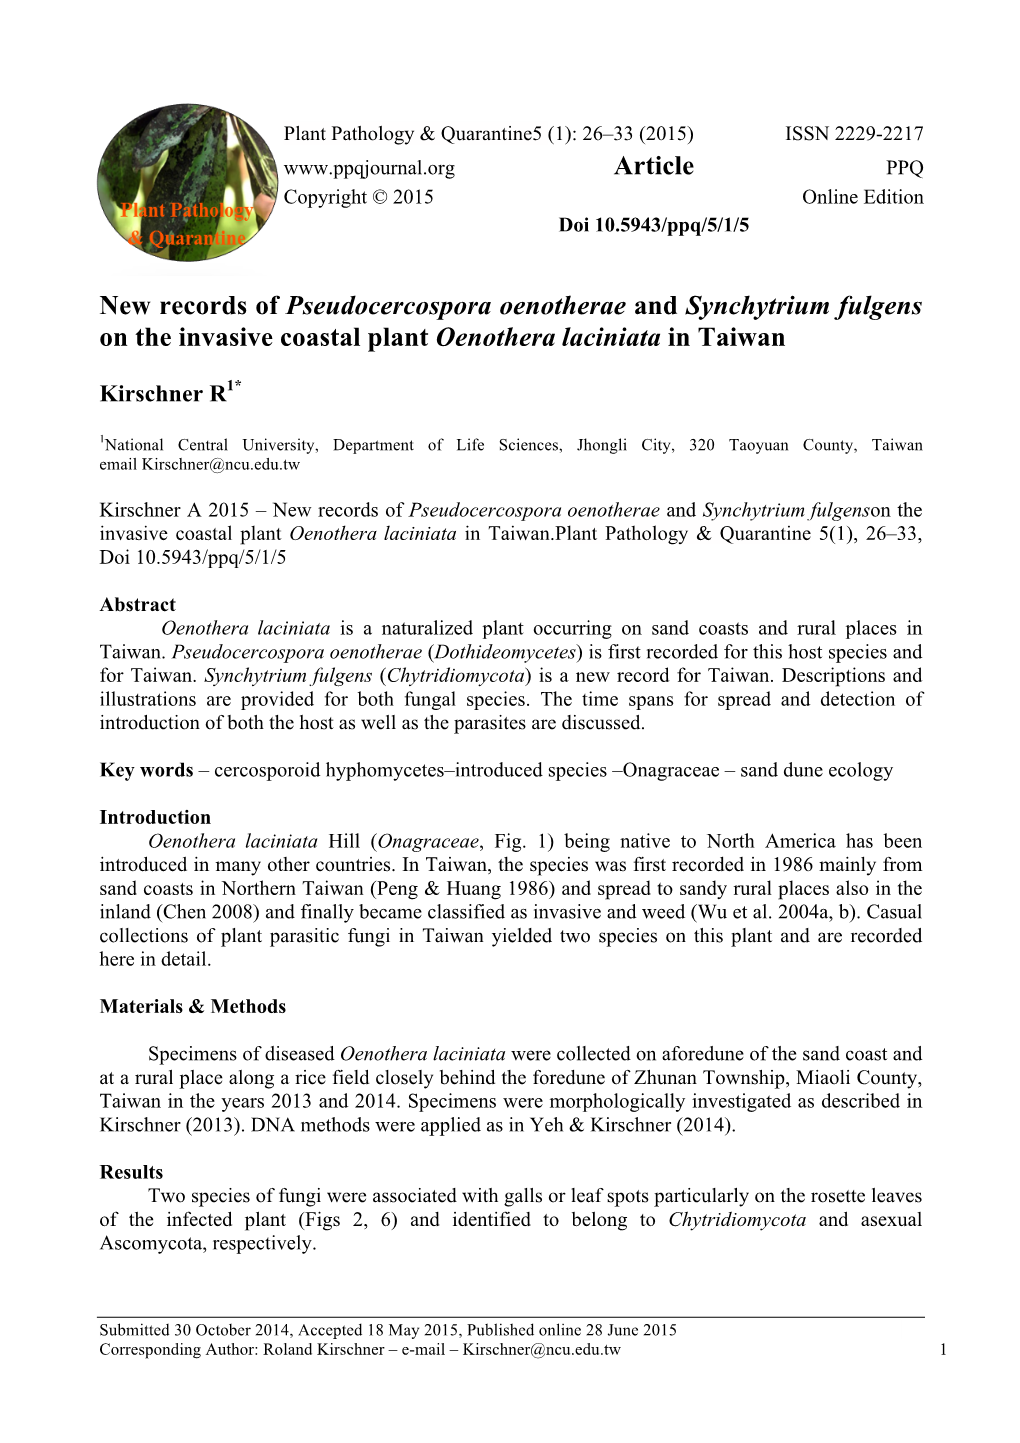 New Records of Pseudocercospora Oenotherae and Synchytrium Fulgens on the Invasive Coastal Plant Oenothera Laciniata in Taiwan